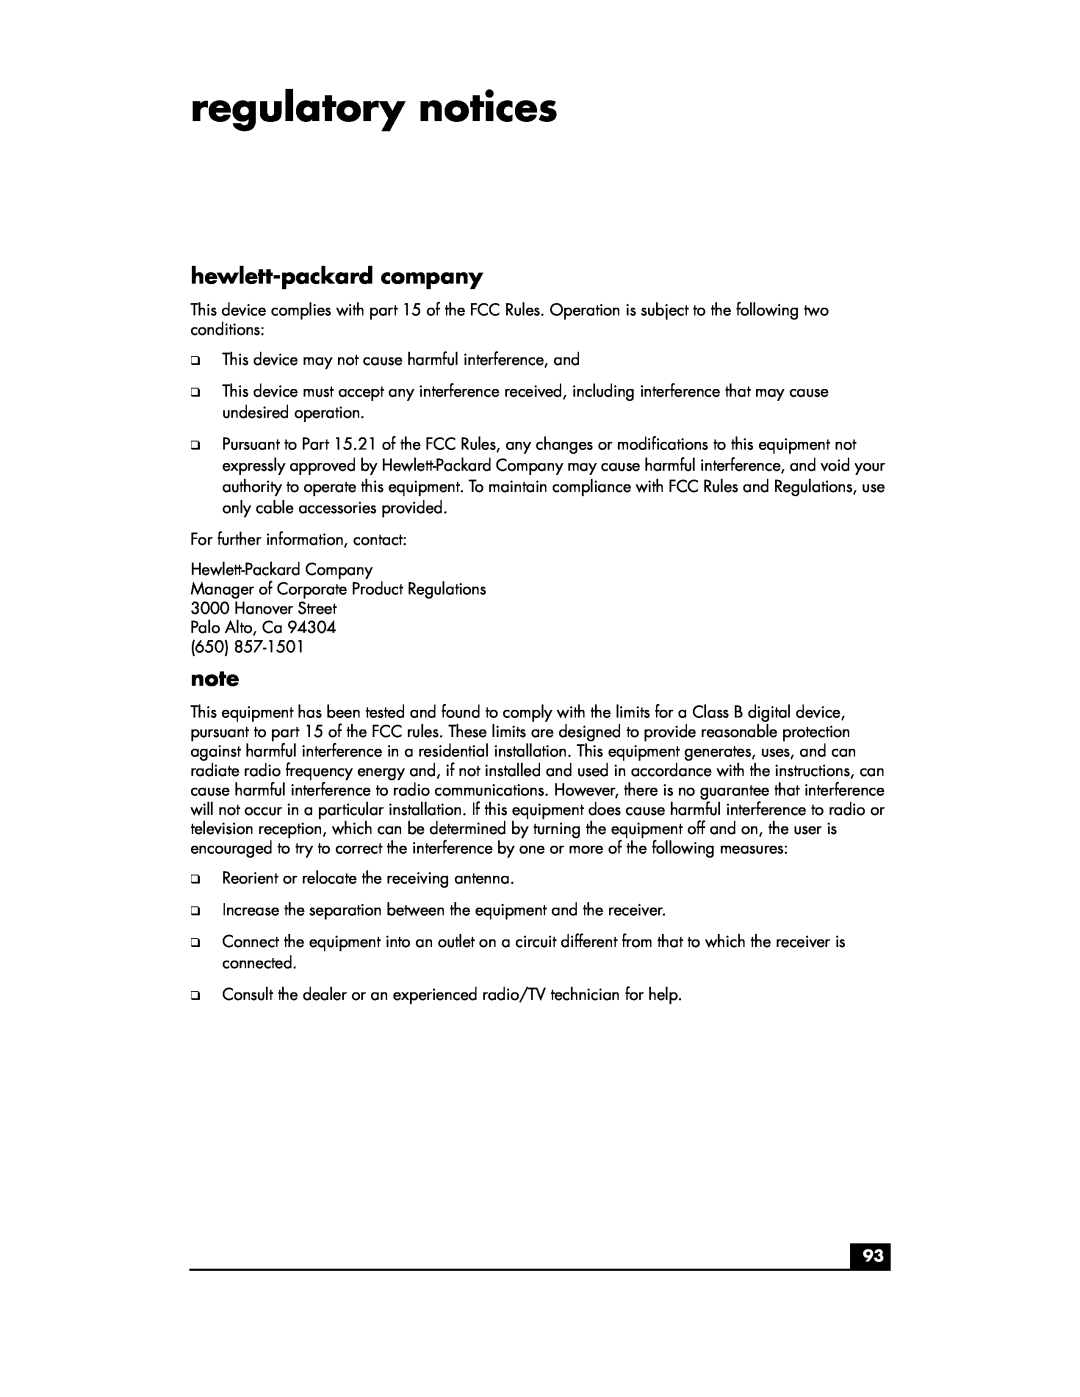 HP hn200w manual regulatory notices, hewlett-packard company 